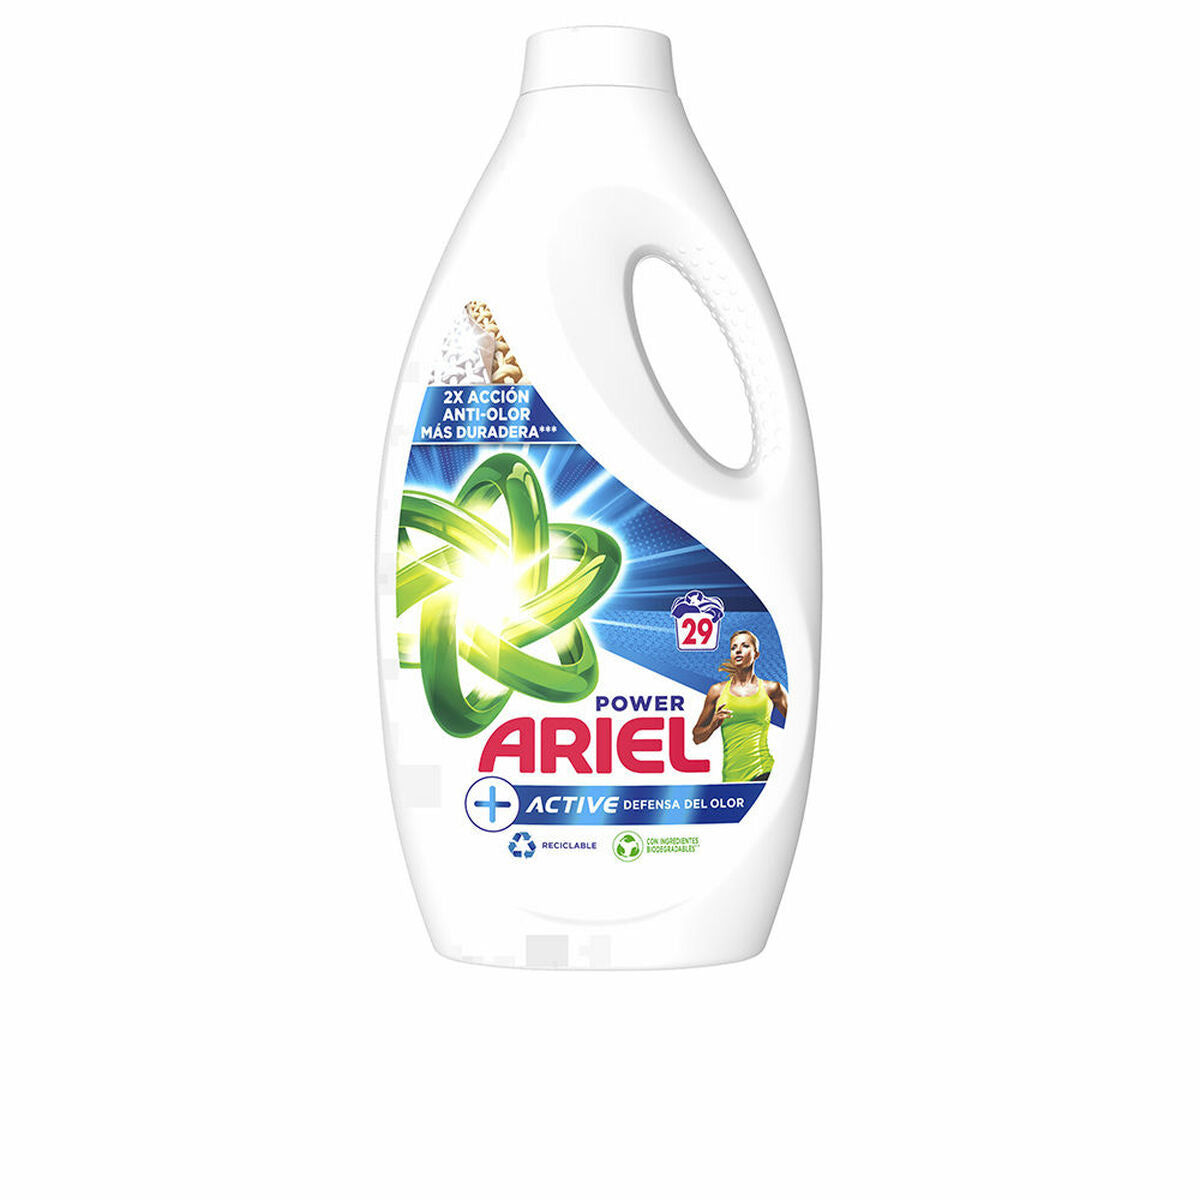 Detergente líquido Ariel odor ativo